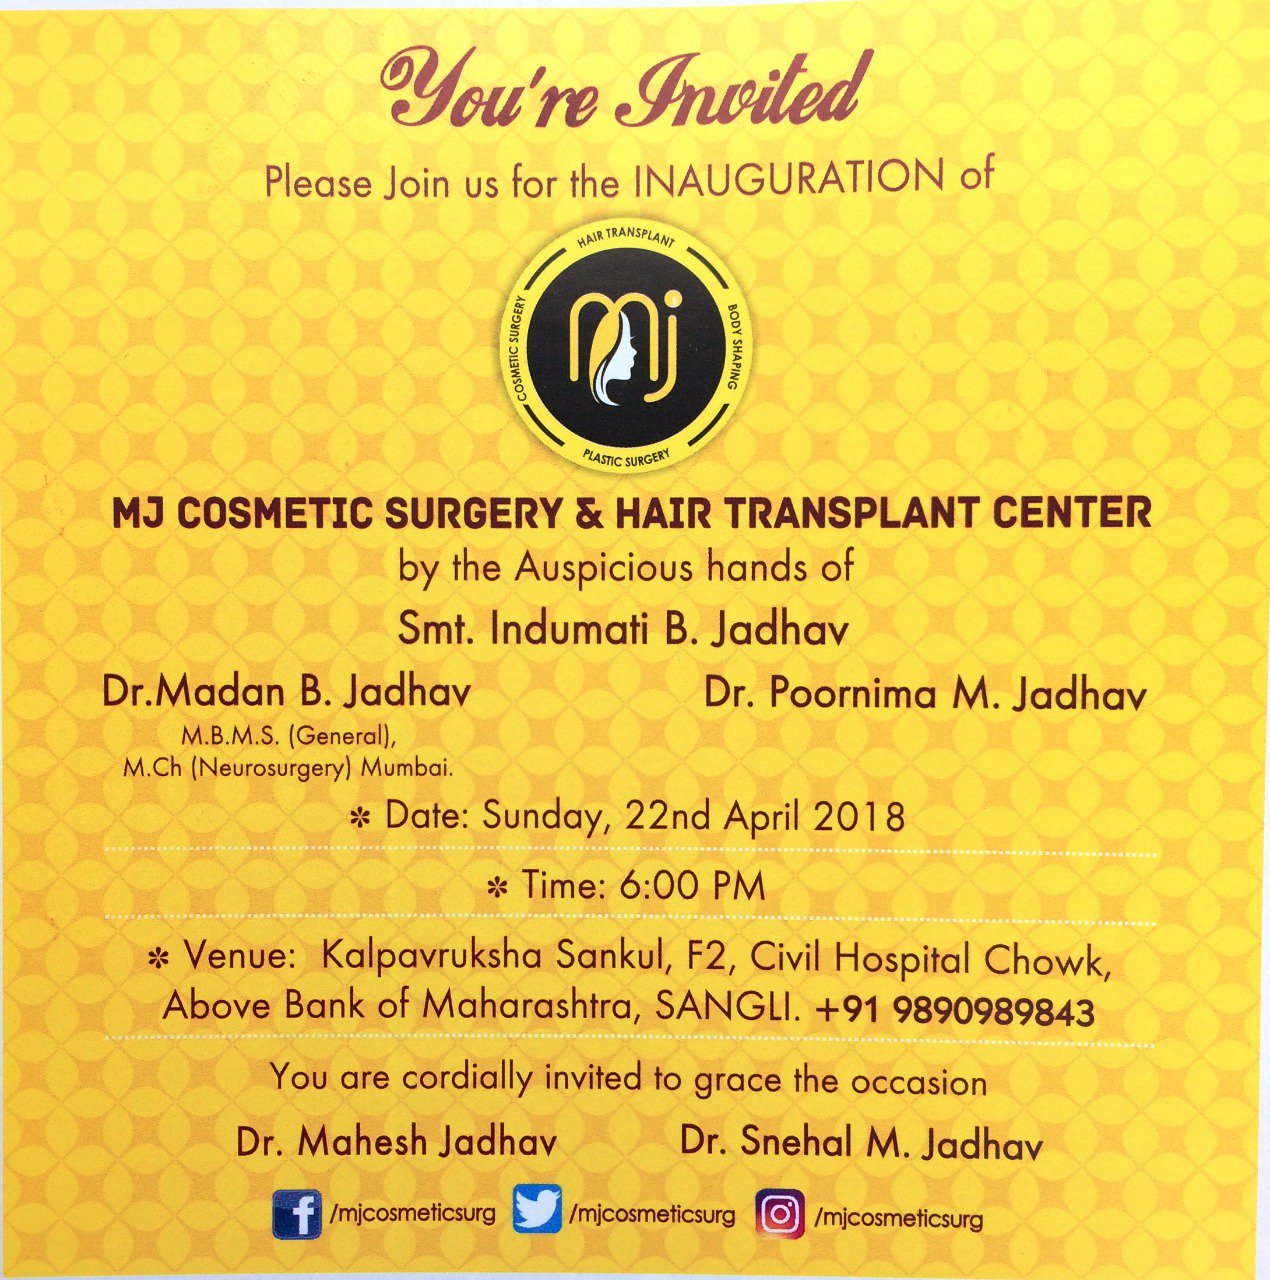 MJ Cosmetic Surgery & Hair Transplant Center (@mjcosmeticsurg) / Twitter